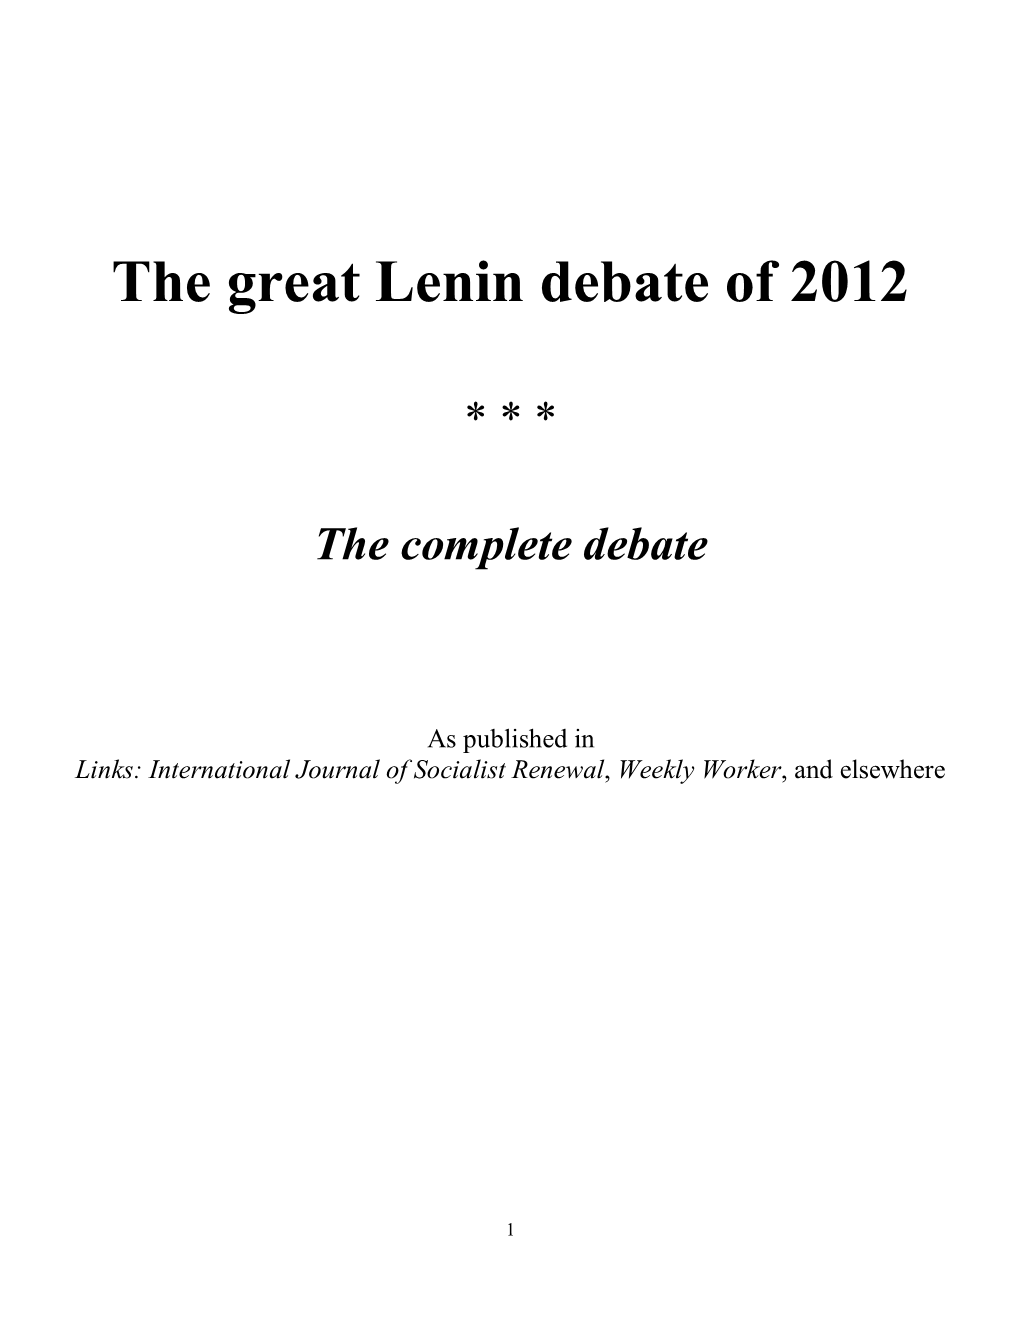 The Great Lenin Debate of 2012